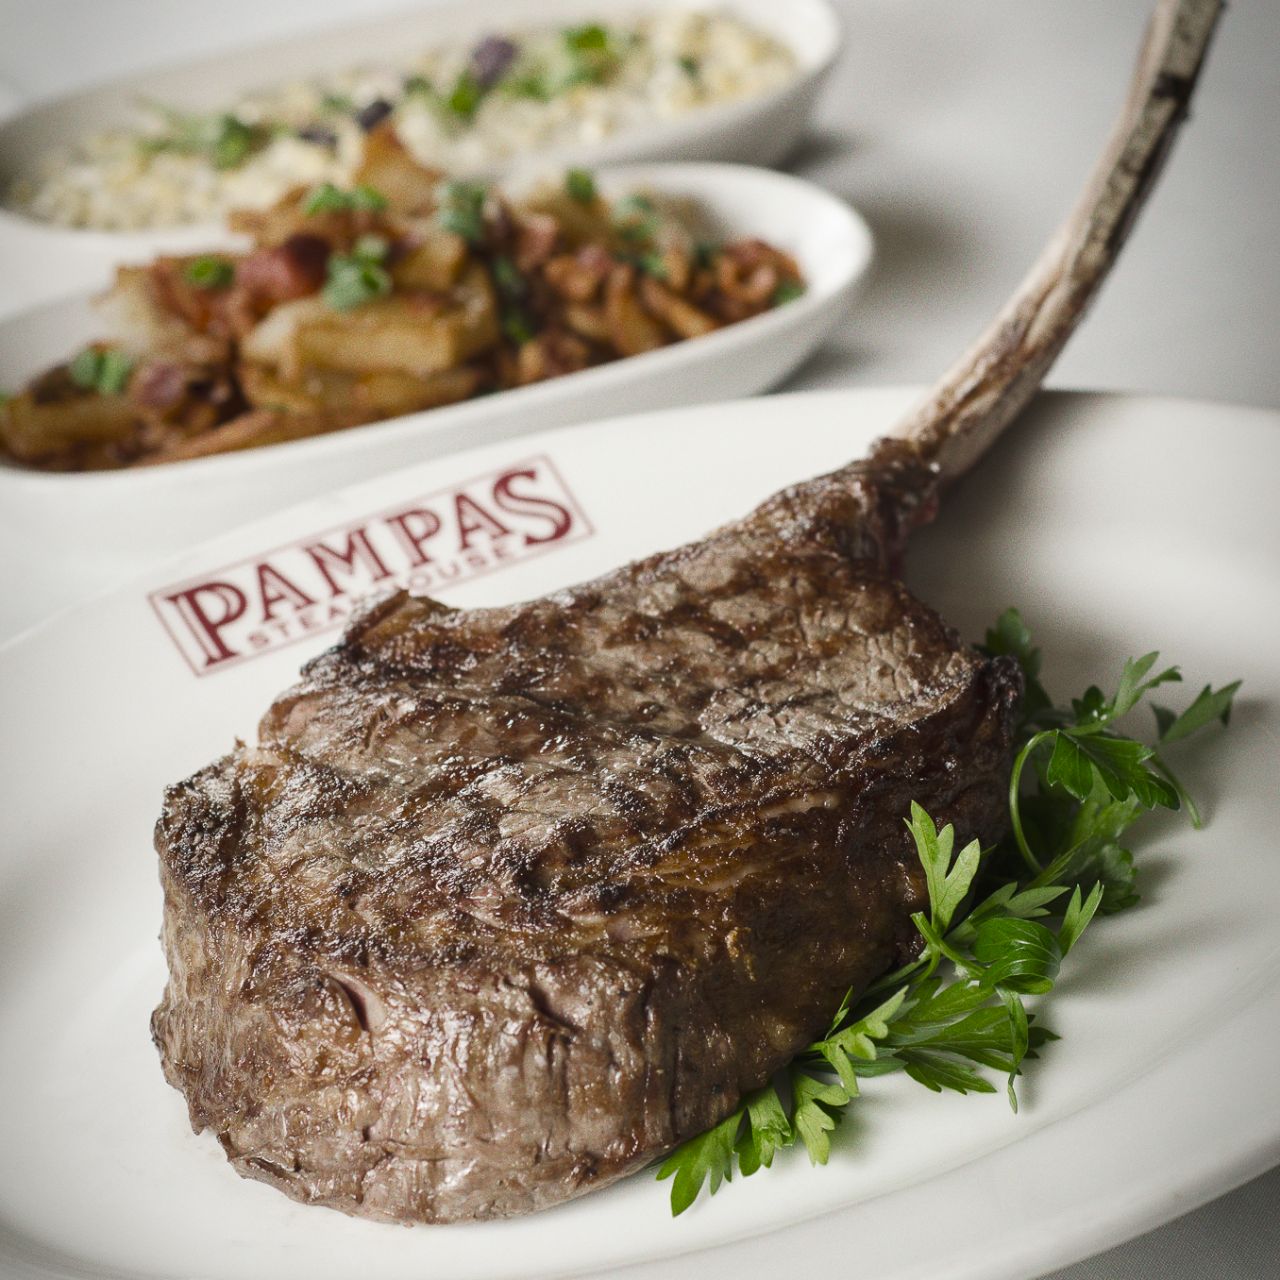 Pampas steakhouse